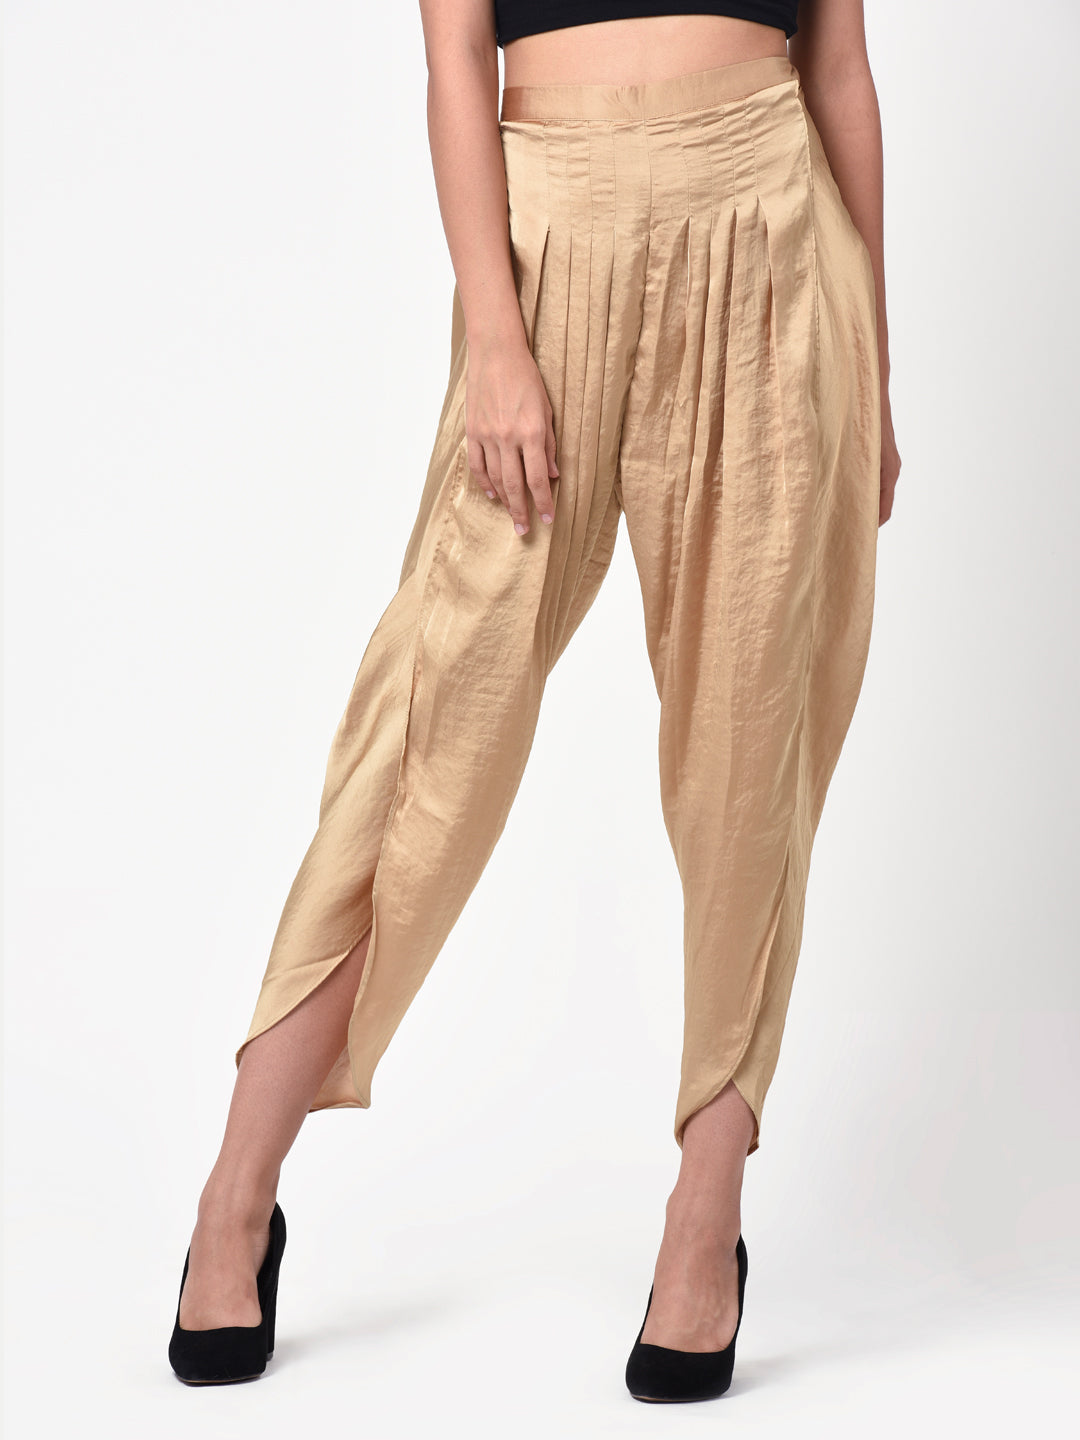 Twenty Nine Pants : Buy Twenty Nine Ivory Flared Tulip Pants Online | Nykaa  Fashion